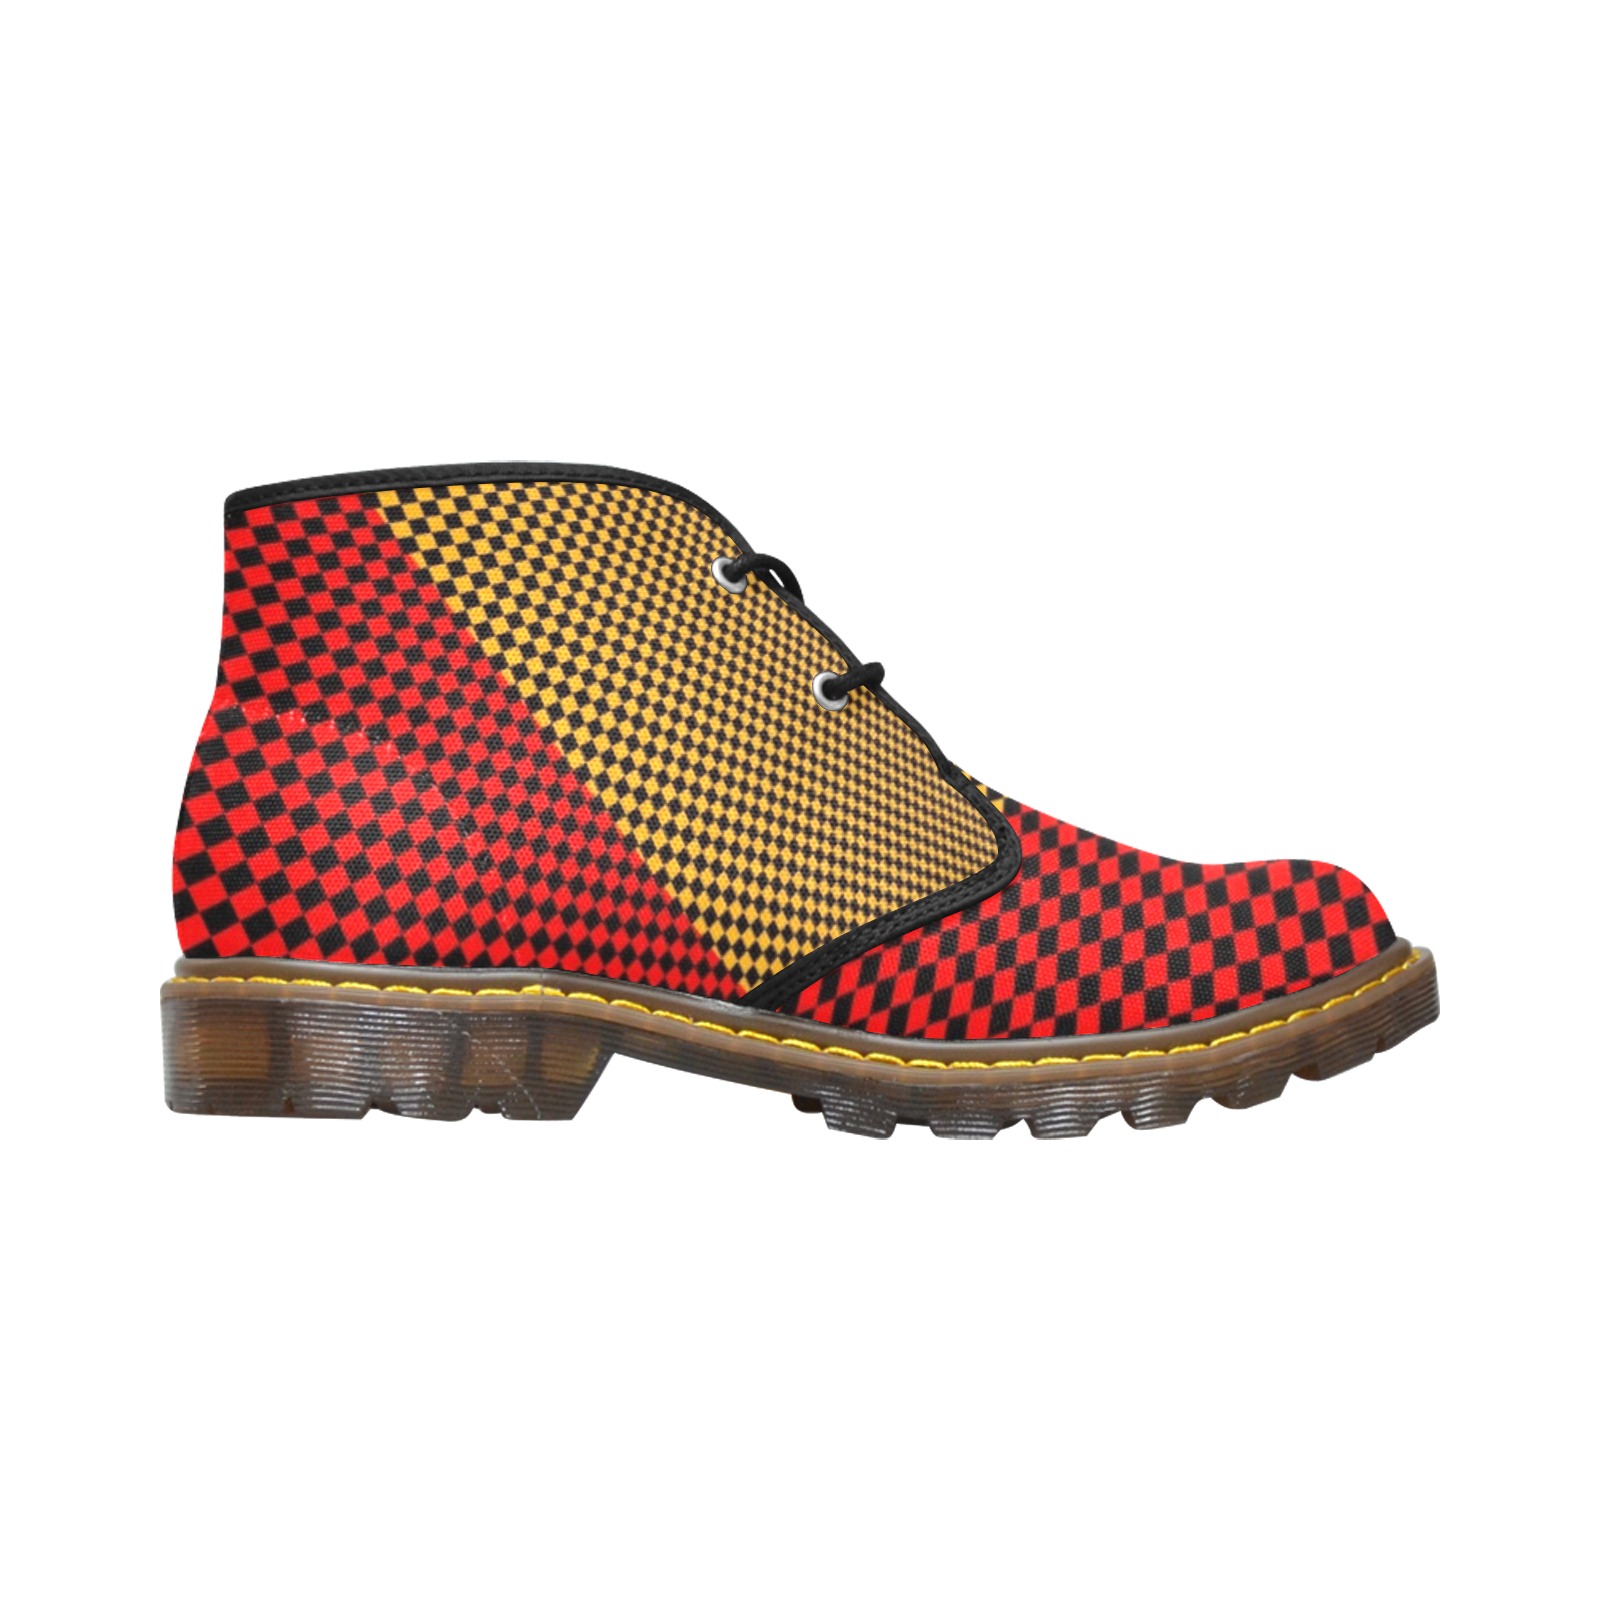 A1 Women's Canvas Chukka Boots (Model 2402-1)